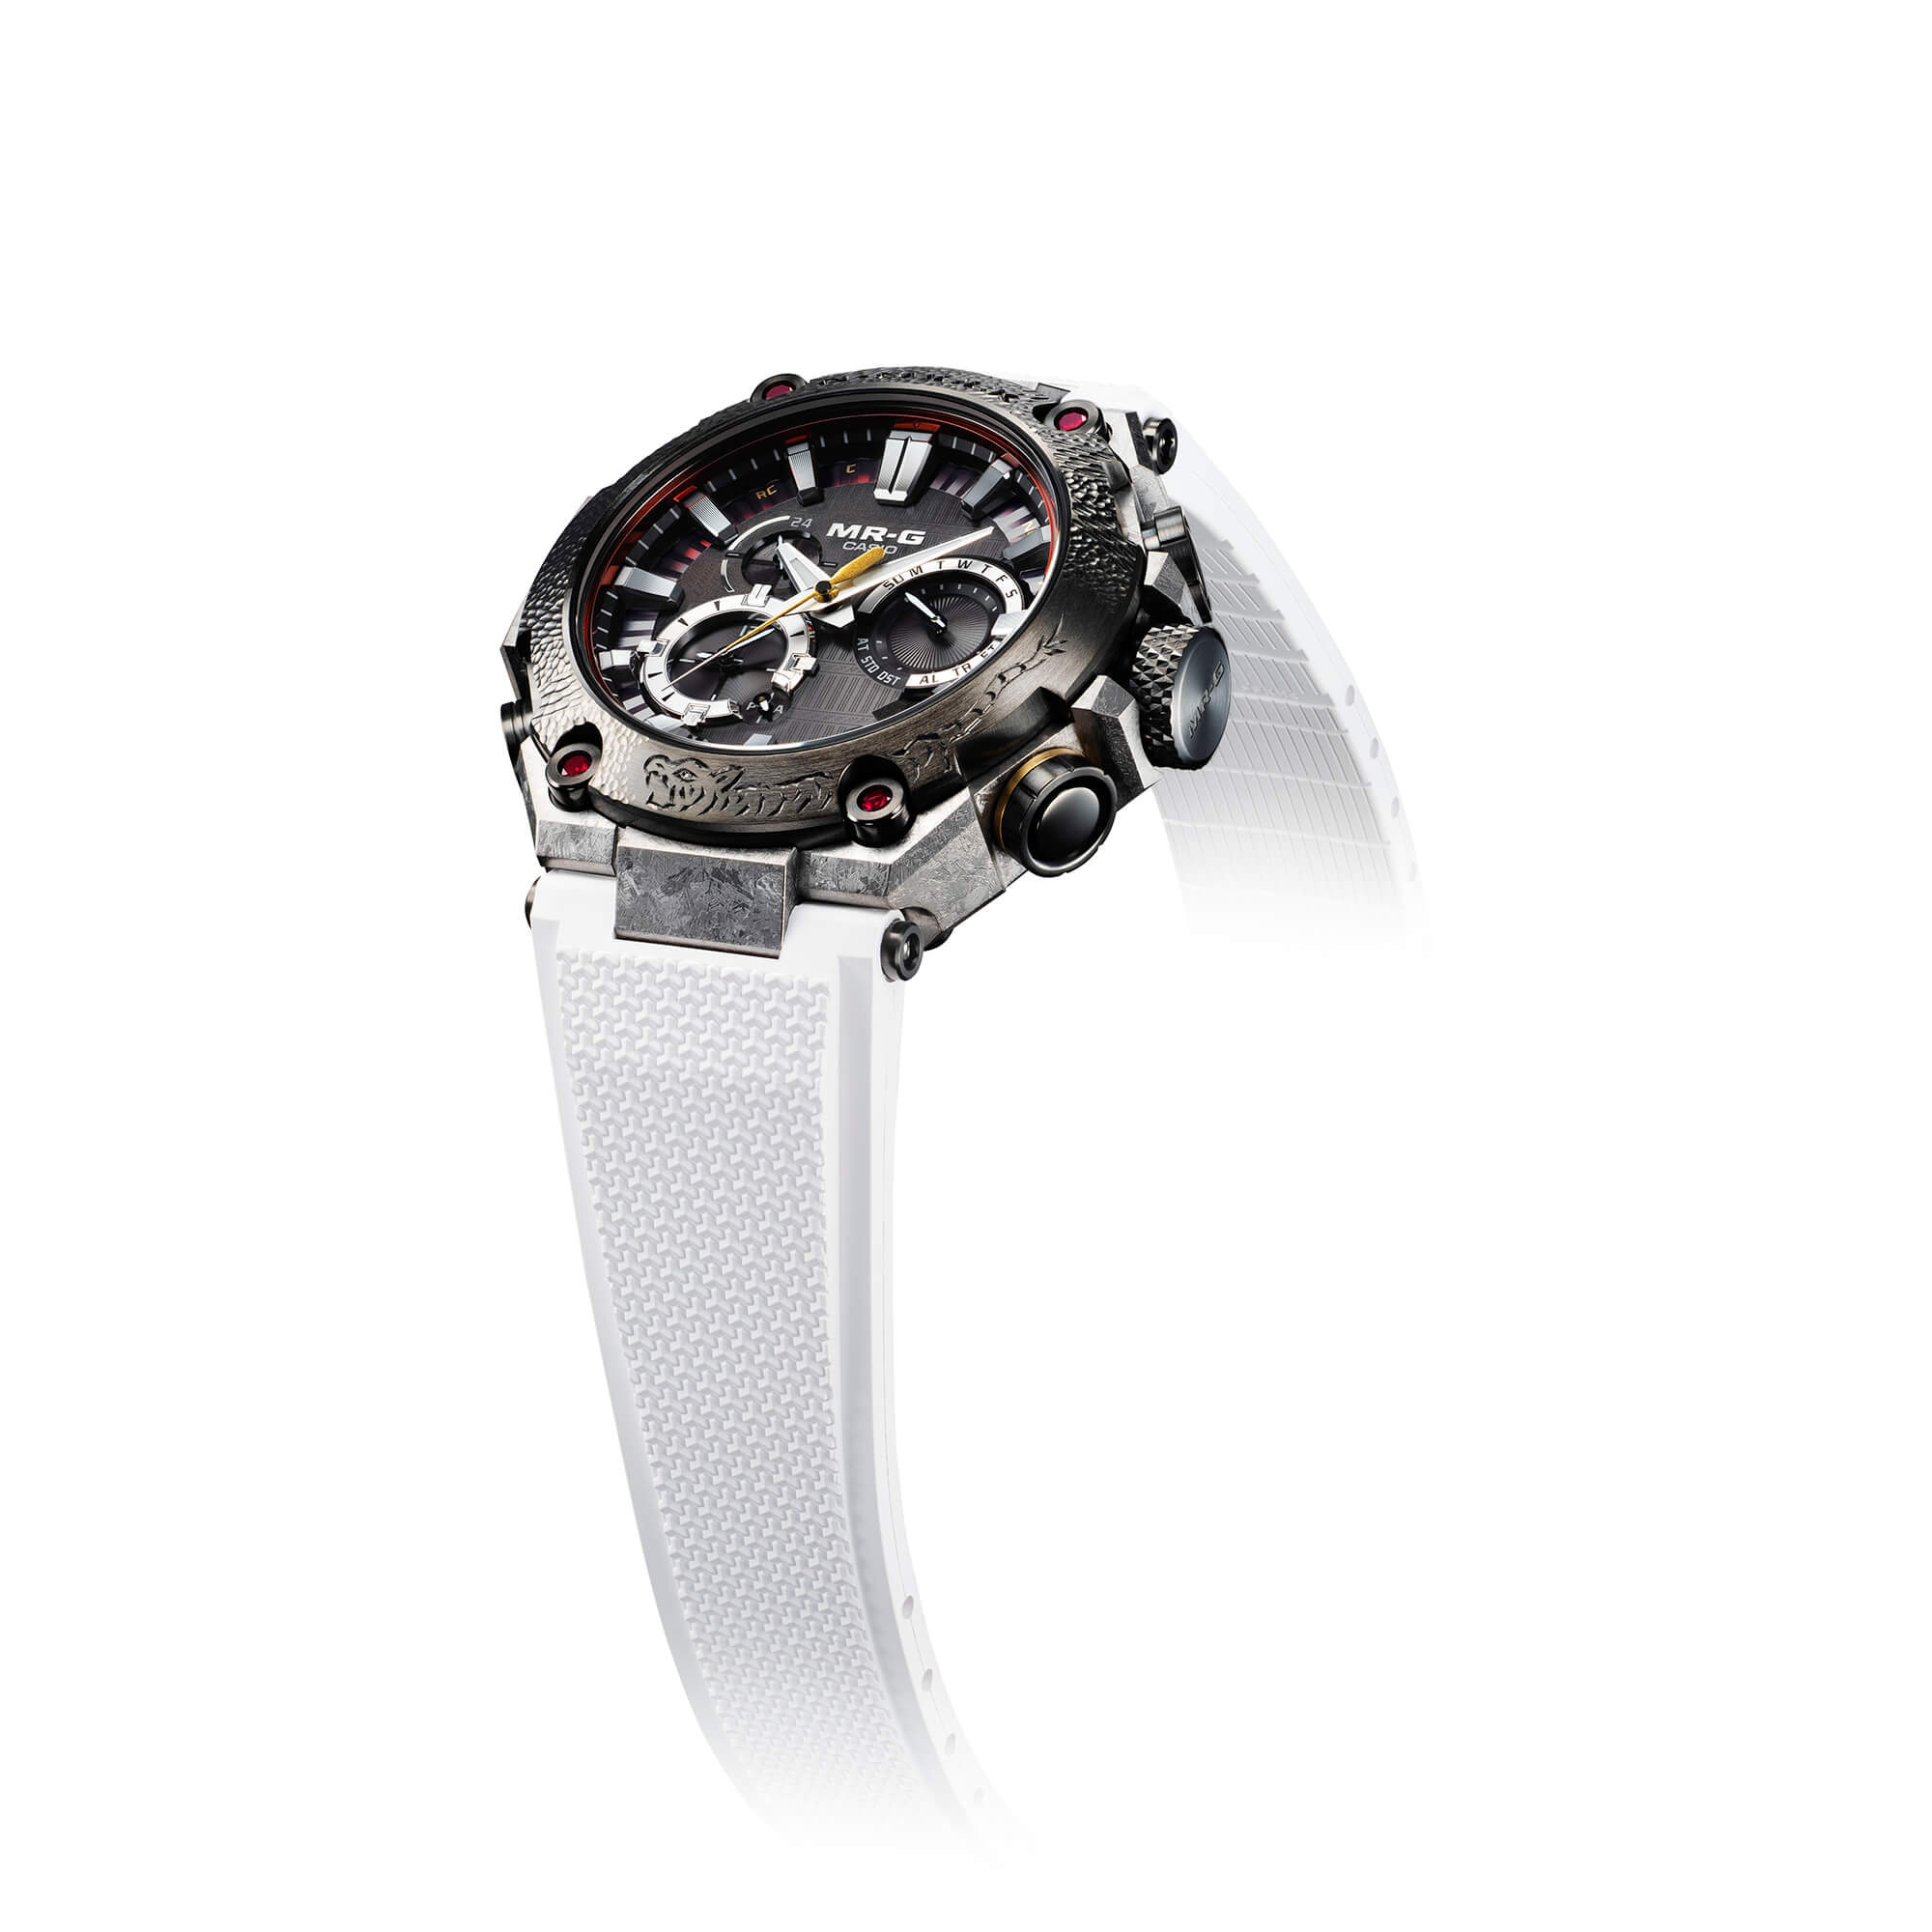 G-Shock MR-G Chronograph Watch Black Dial White Rubber Strap, 54.7mm